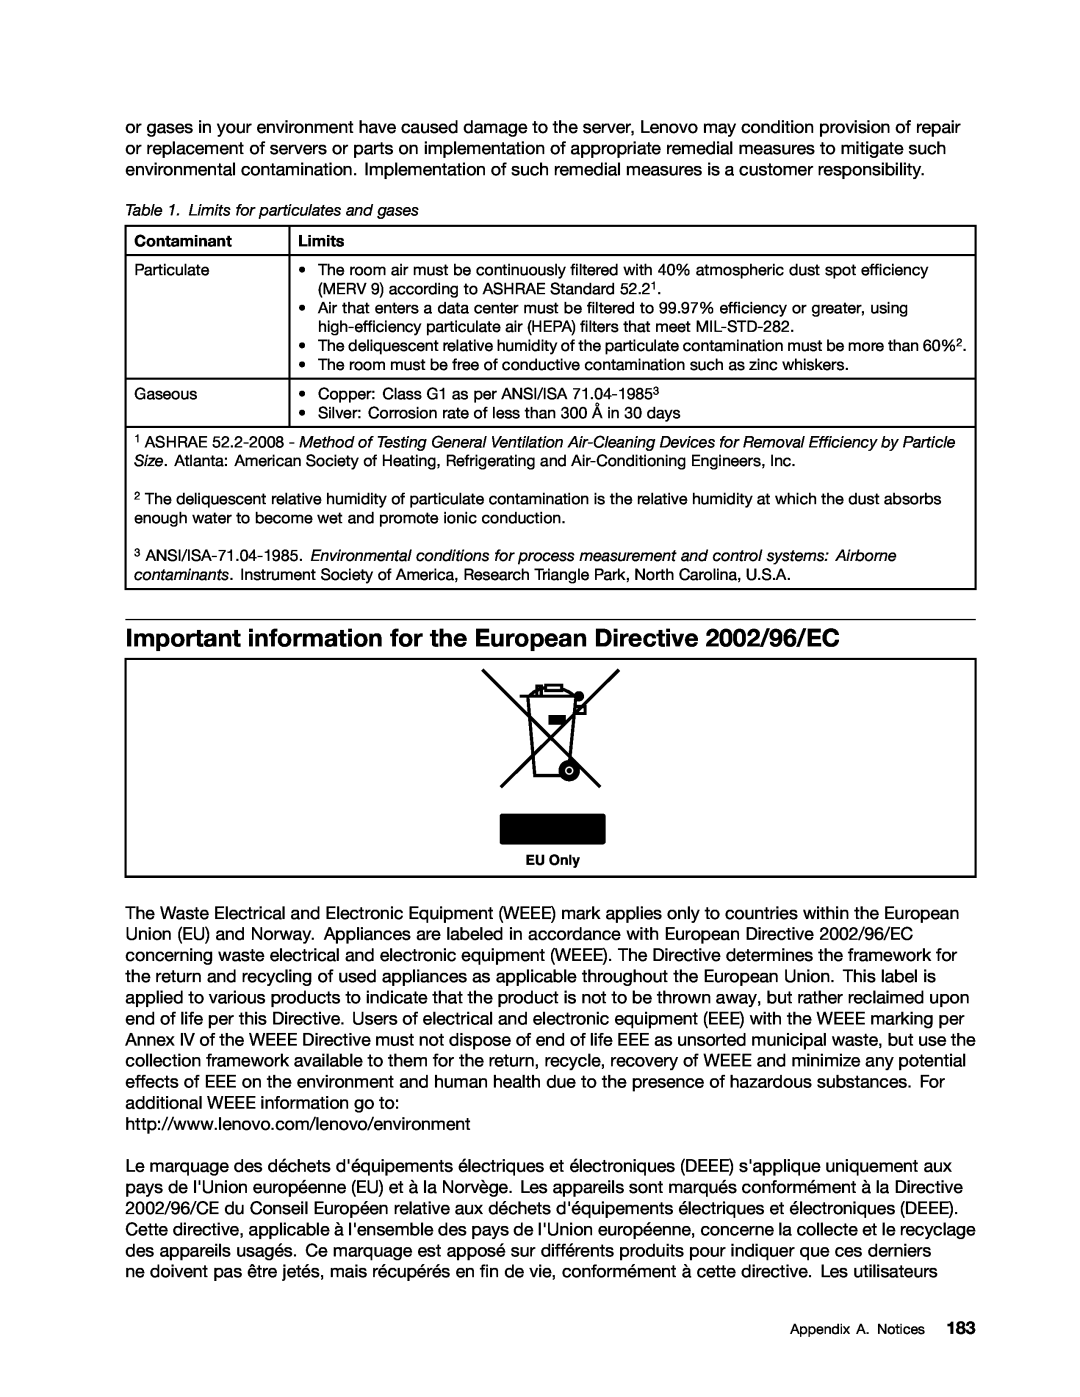 Lenovo 389, 387, 393, 391, 388, 441, 390, 392 Important information for the European Directive 2002/96/EC, Contaminant, Limits 